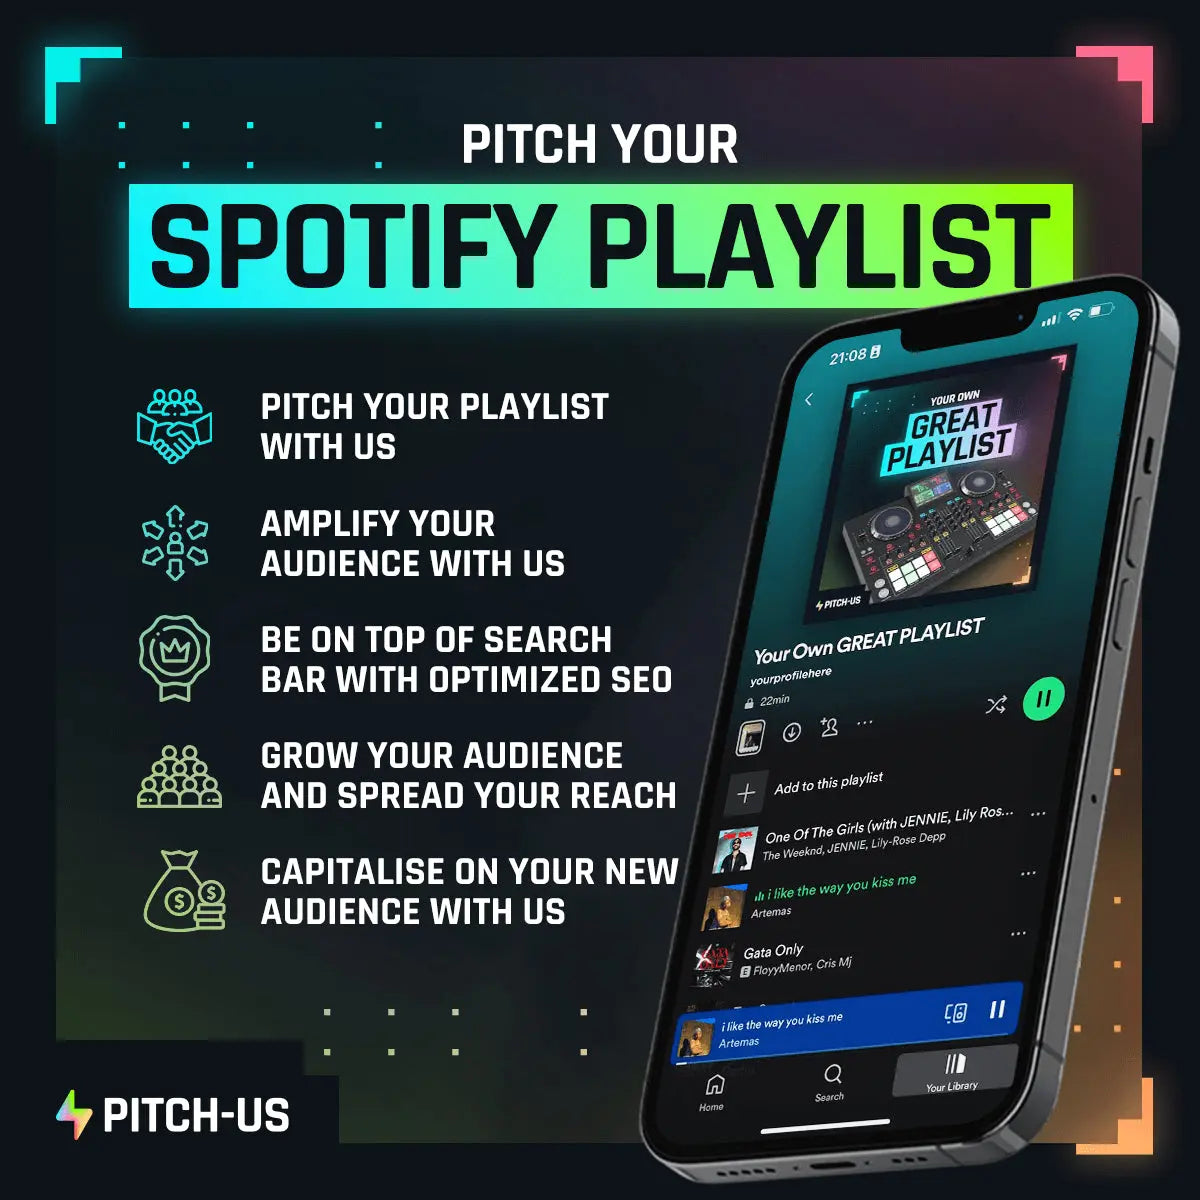 Pitch Your Playlist Pitch-Us